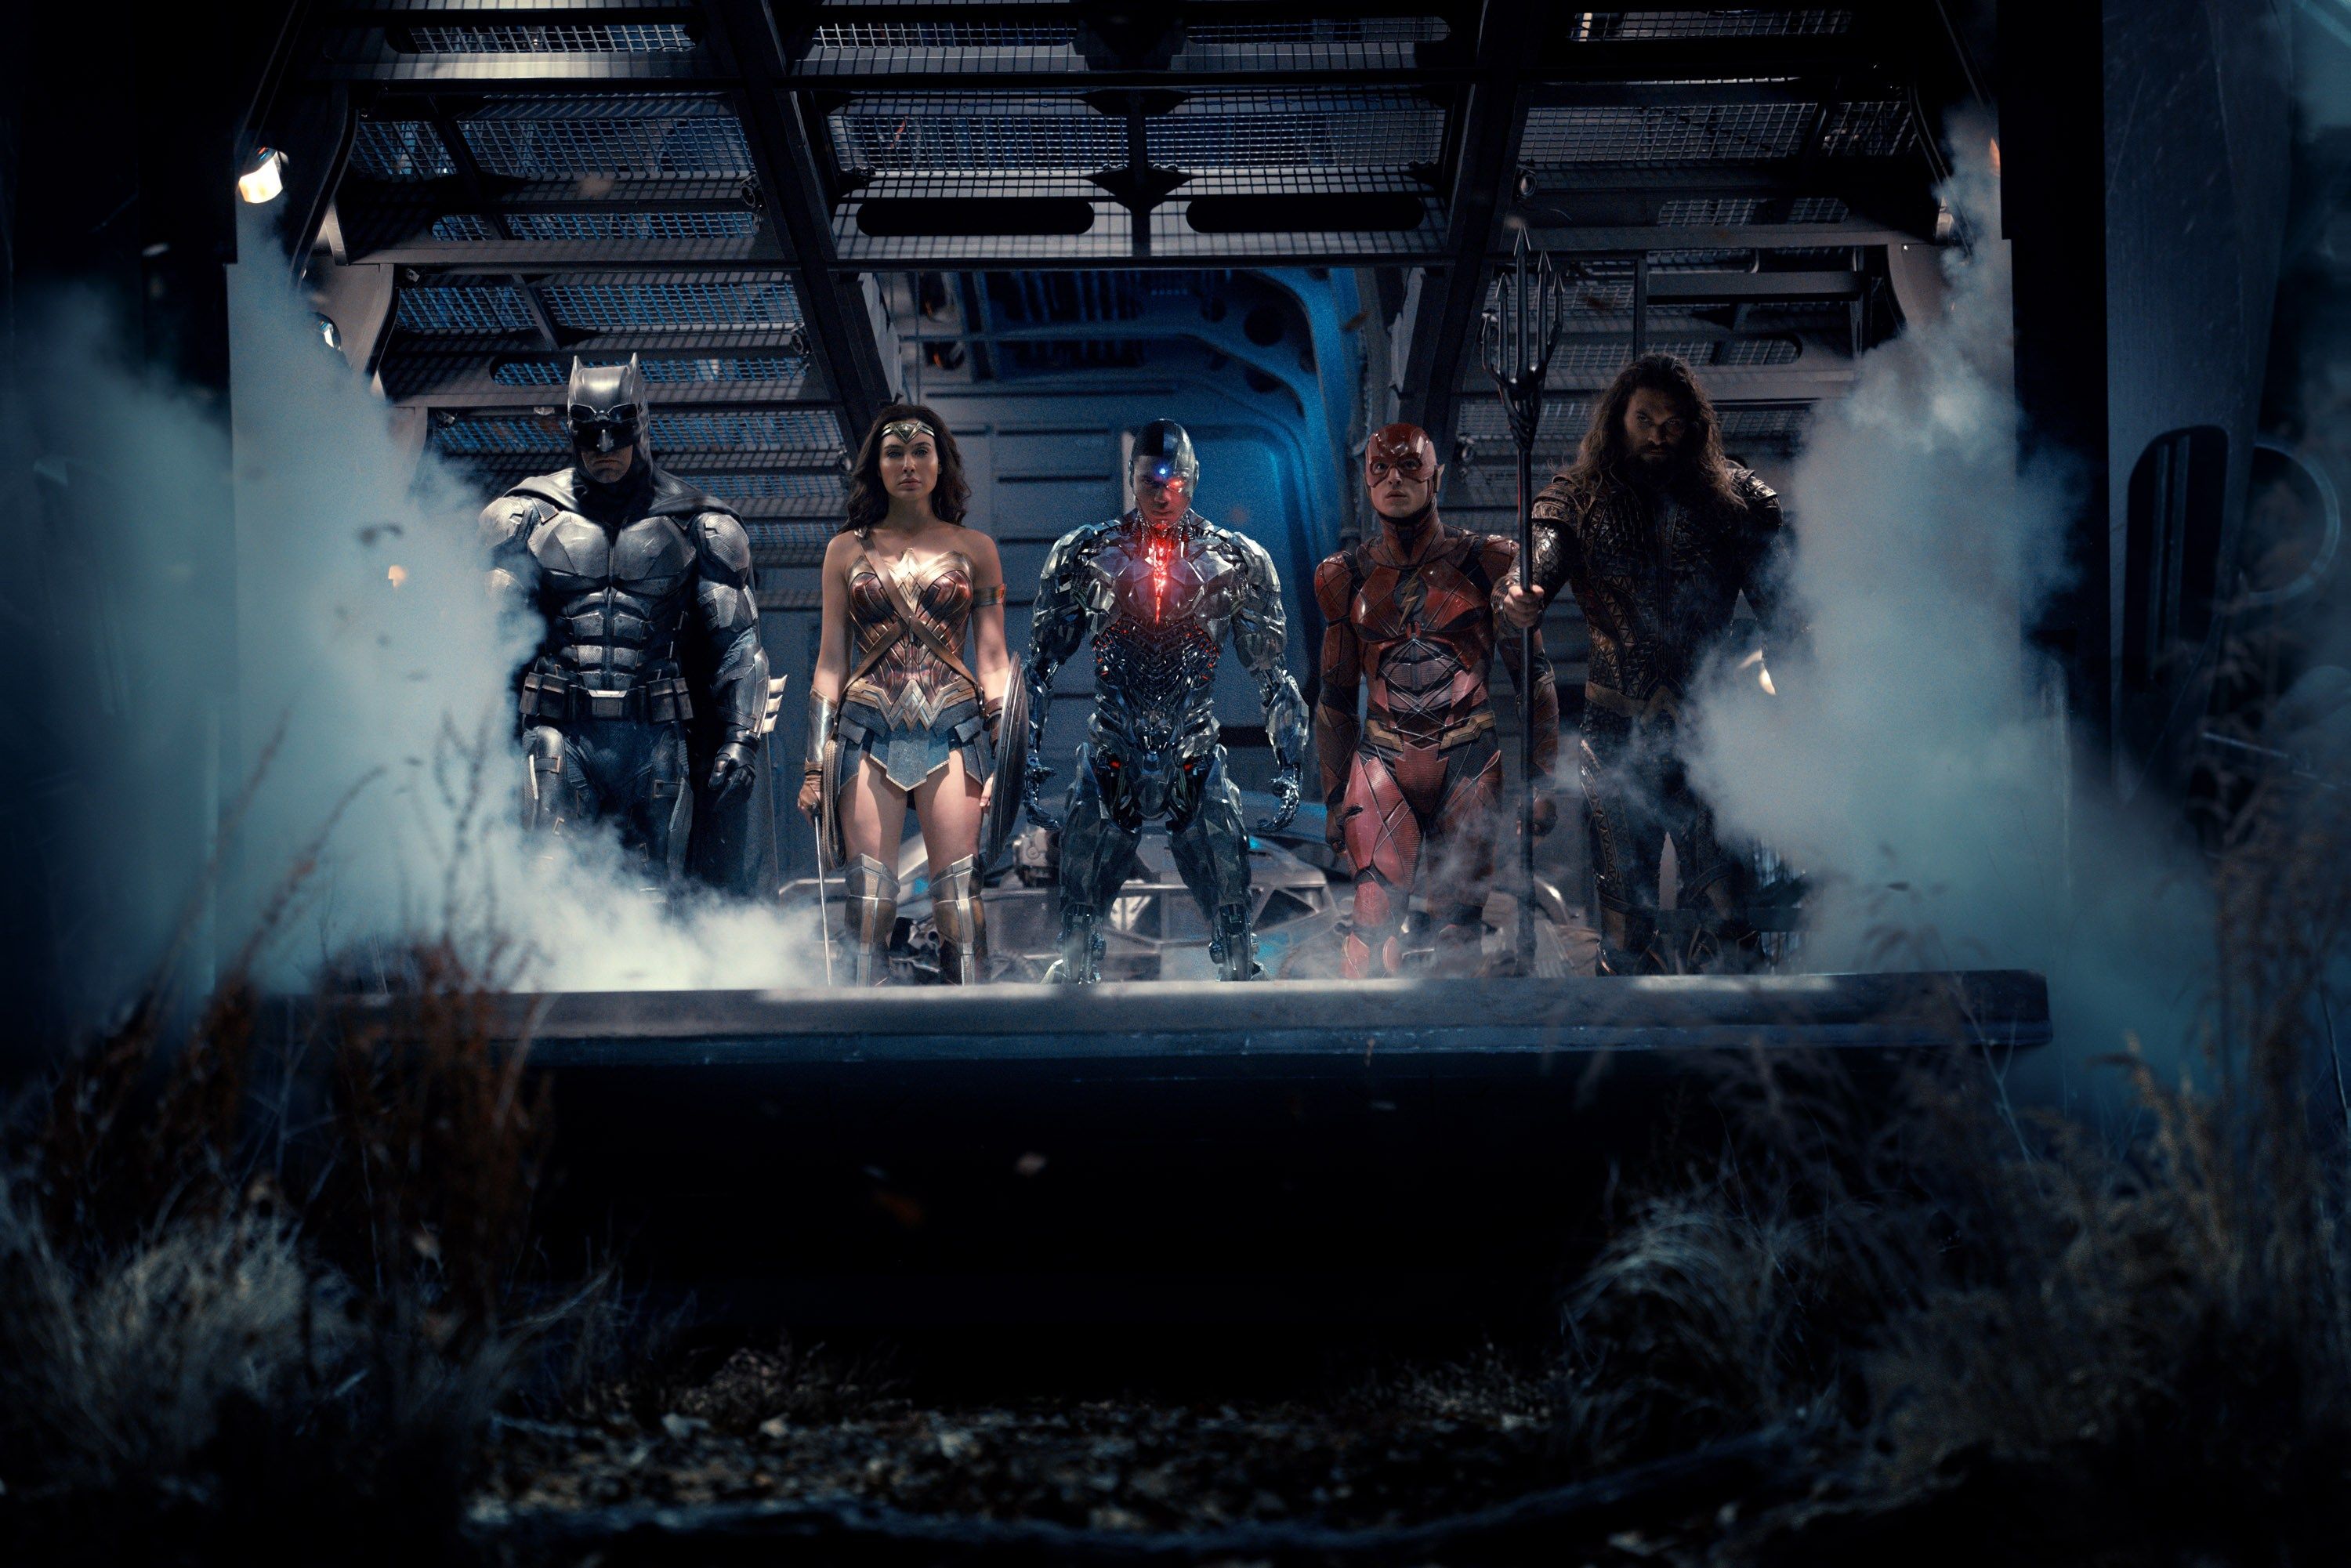 Entire Justice League team - Batman, Wonder Woman, Cyborg, Flash, Aquaman